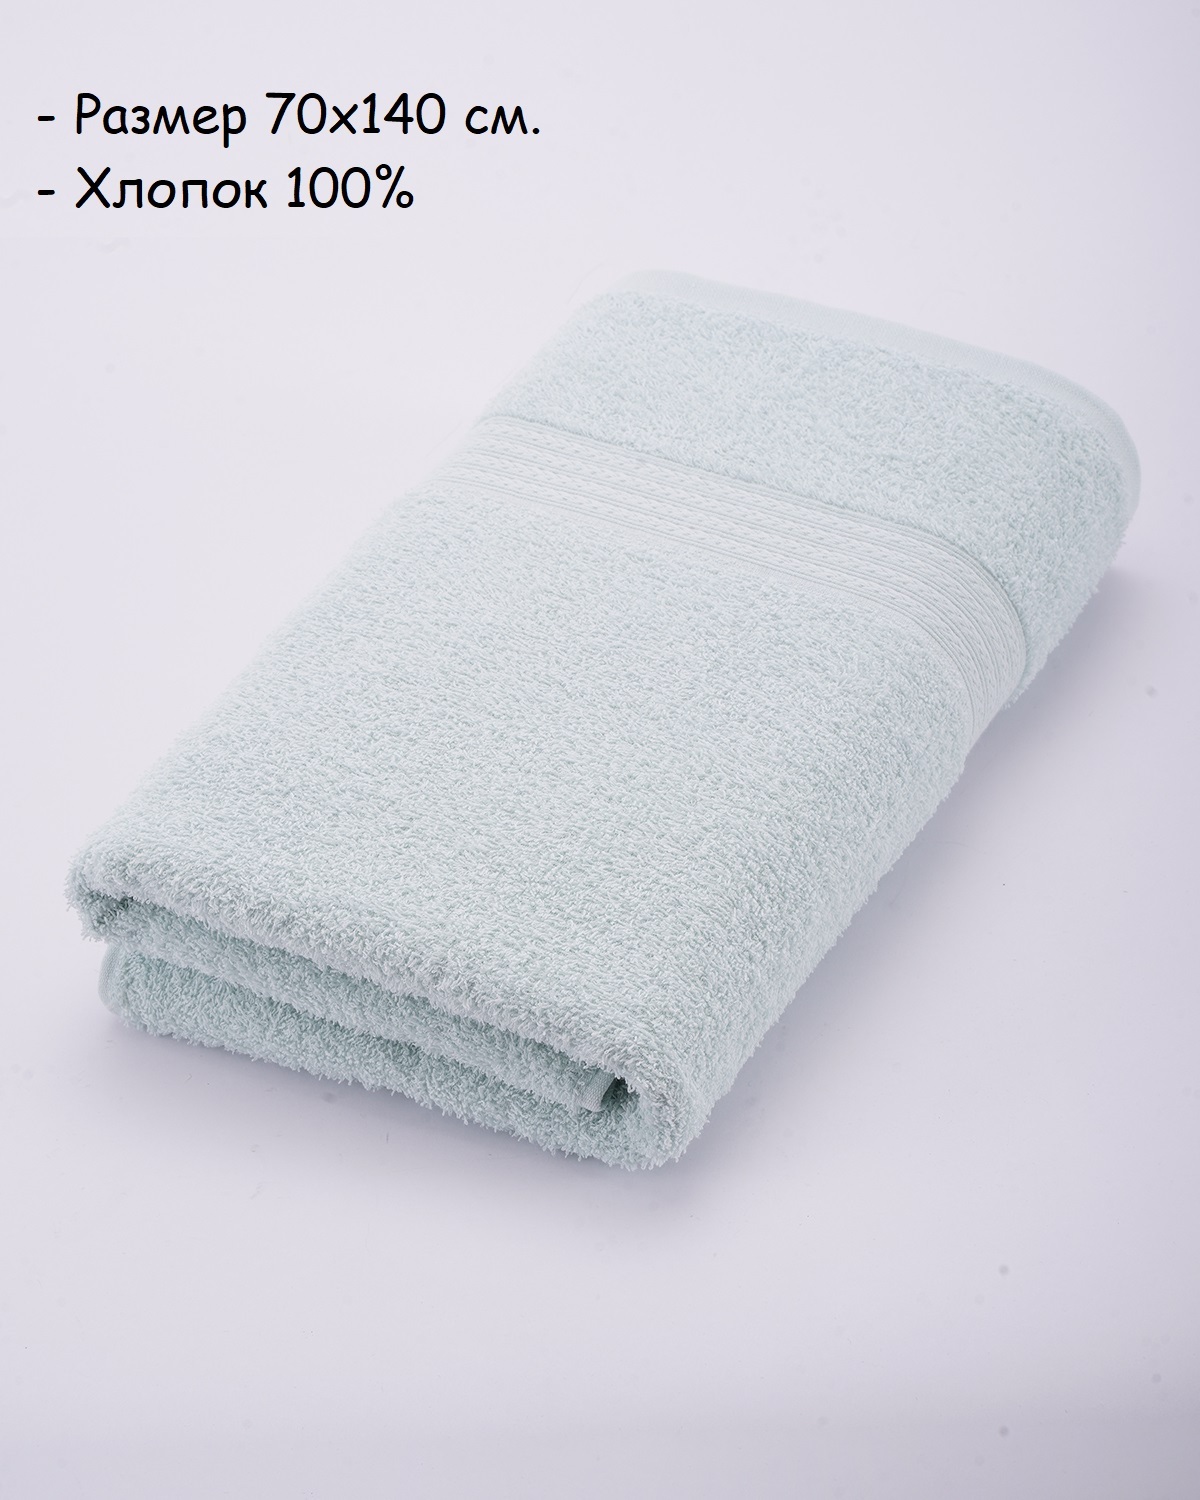 Полотенце на резинке. Полотенца н5. Best quality полотенце банное 140=70 купить.